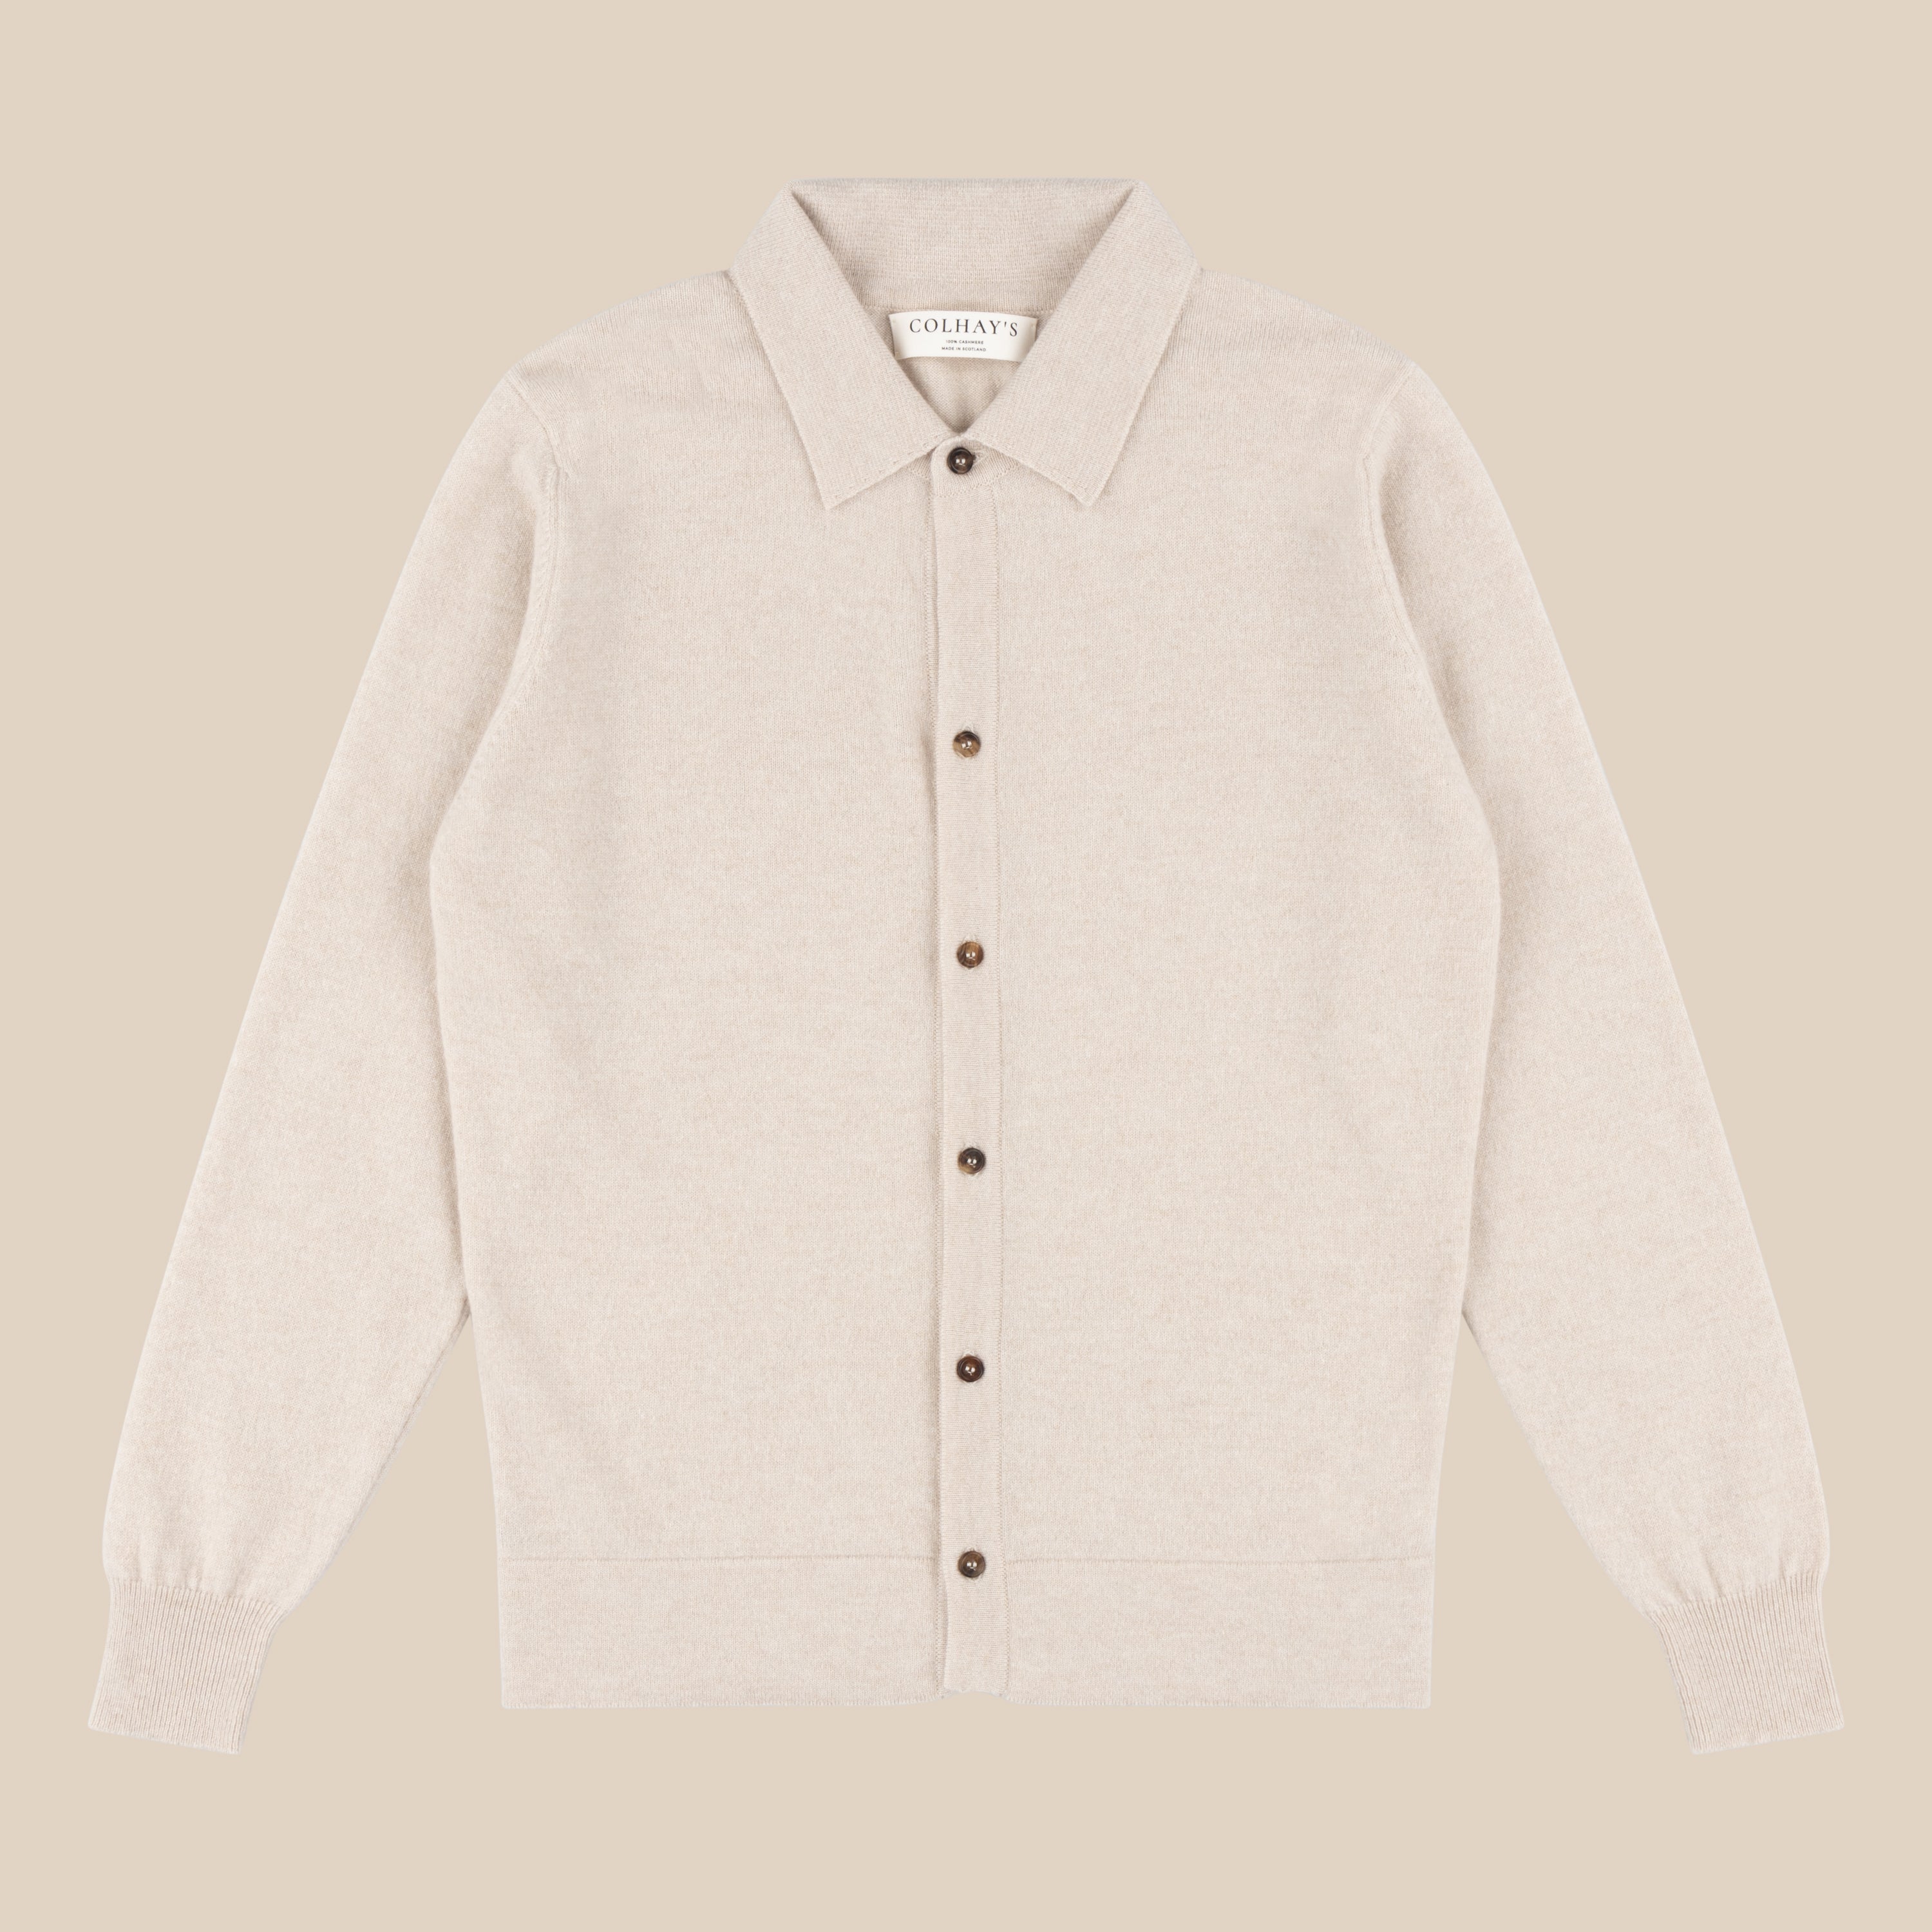 Women's Zip-Up Cashmere Cardigan Sweater - Pura Cashmere